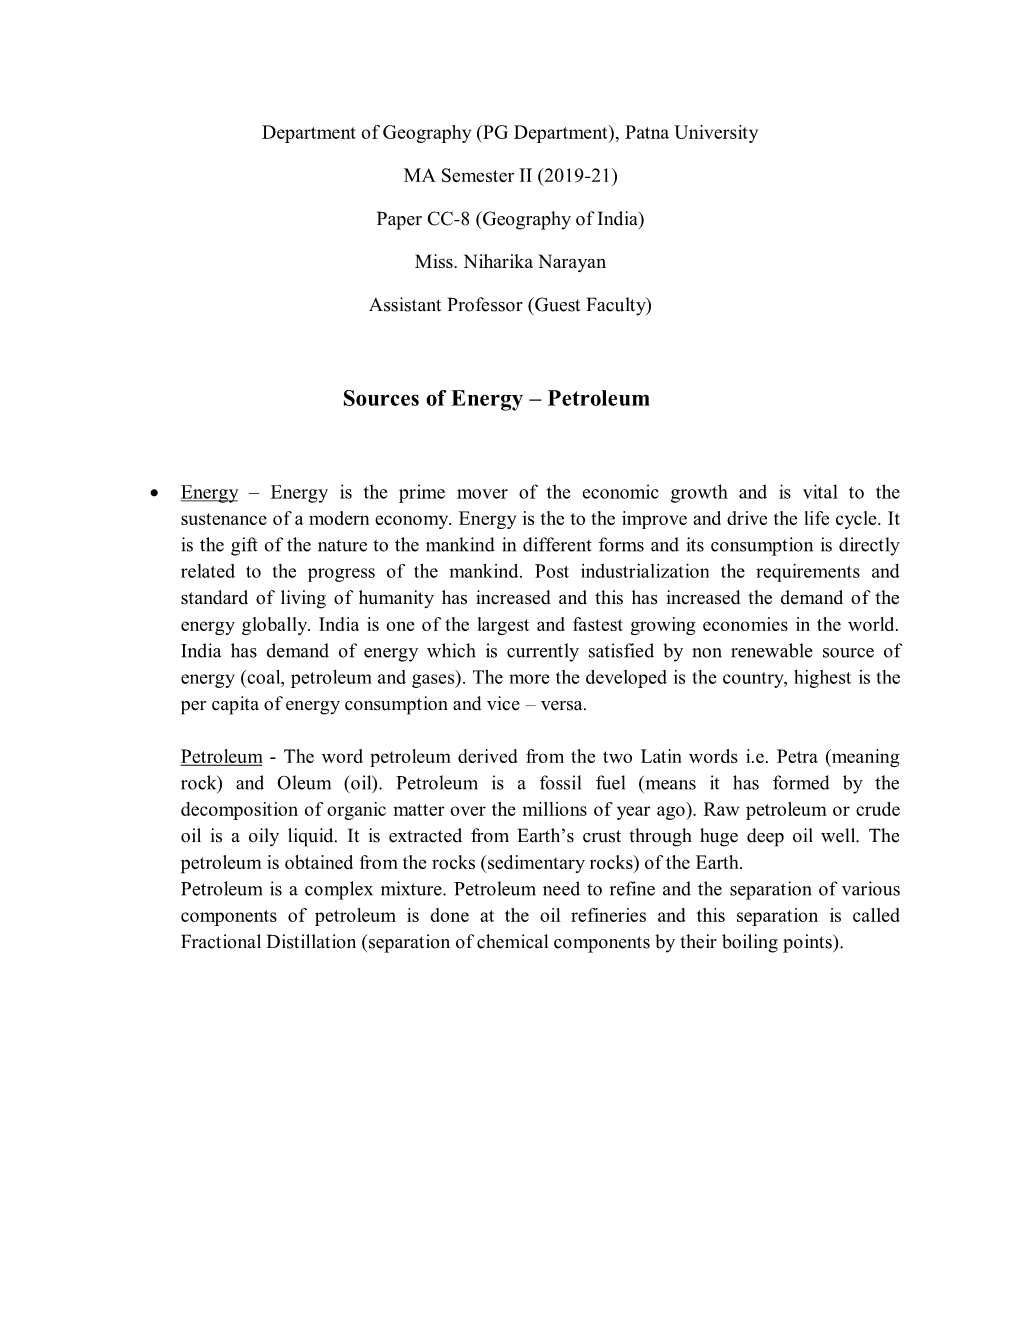 Sources of Energy – Petroleum